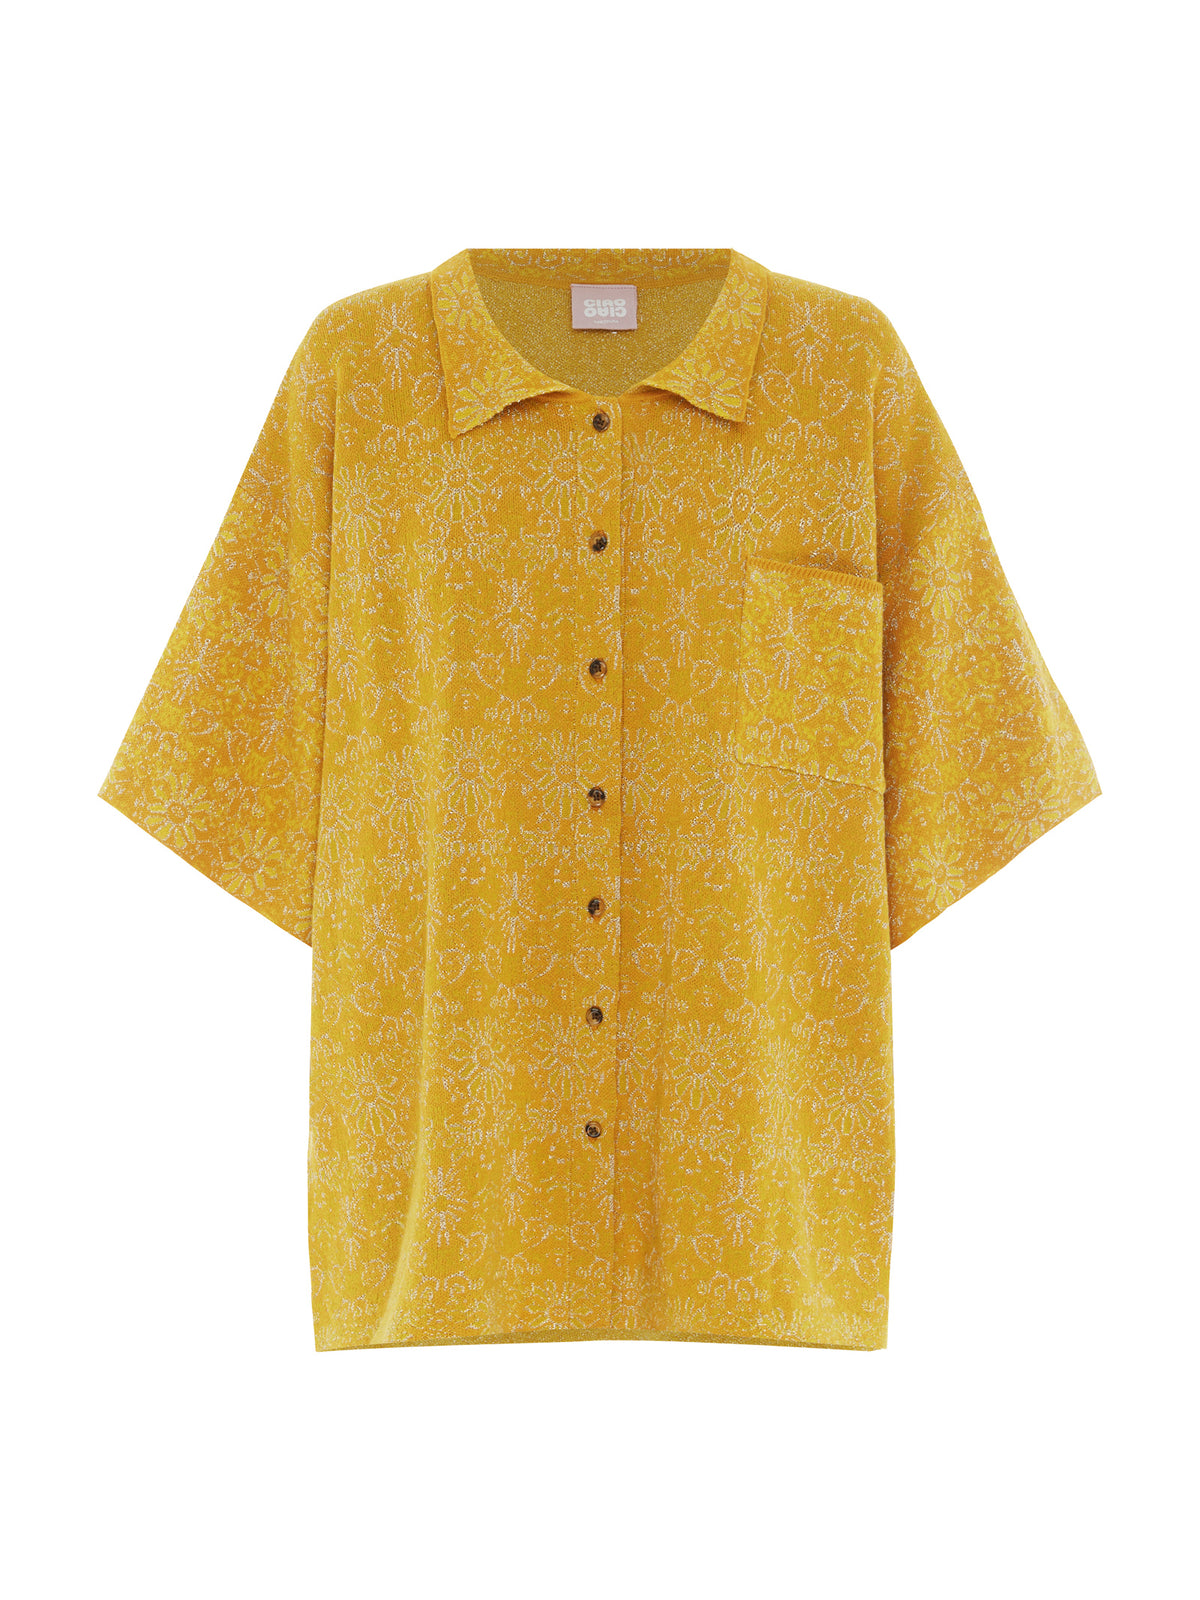 Sloane Button Down Shirt in Goldie